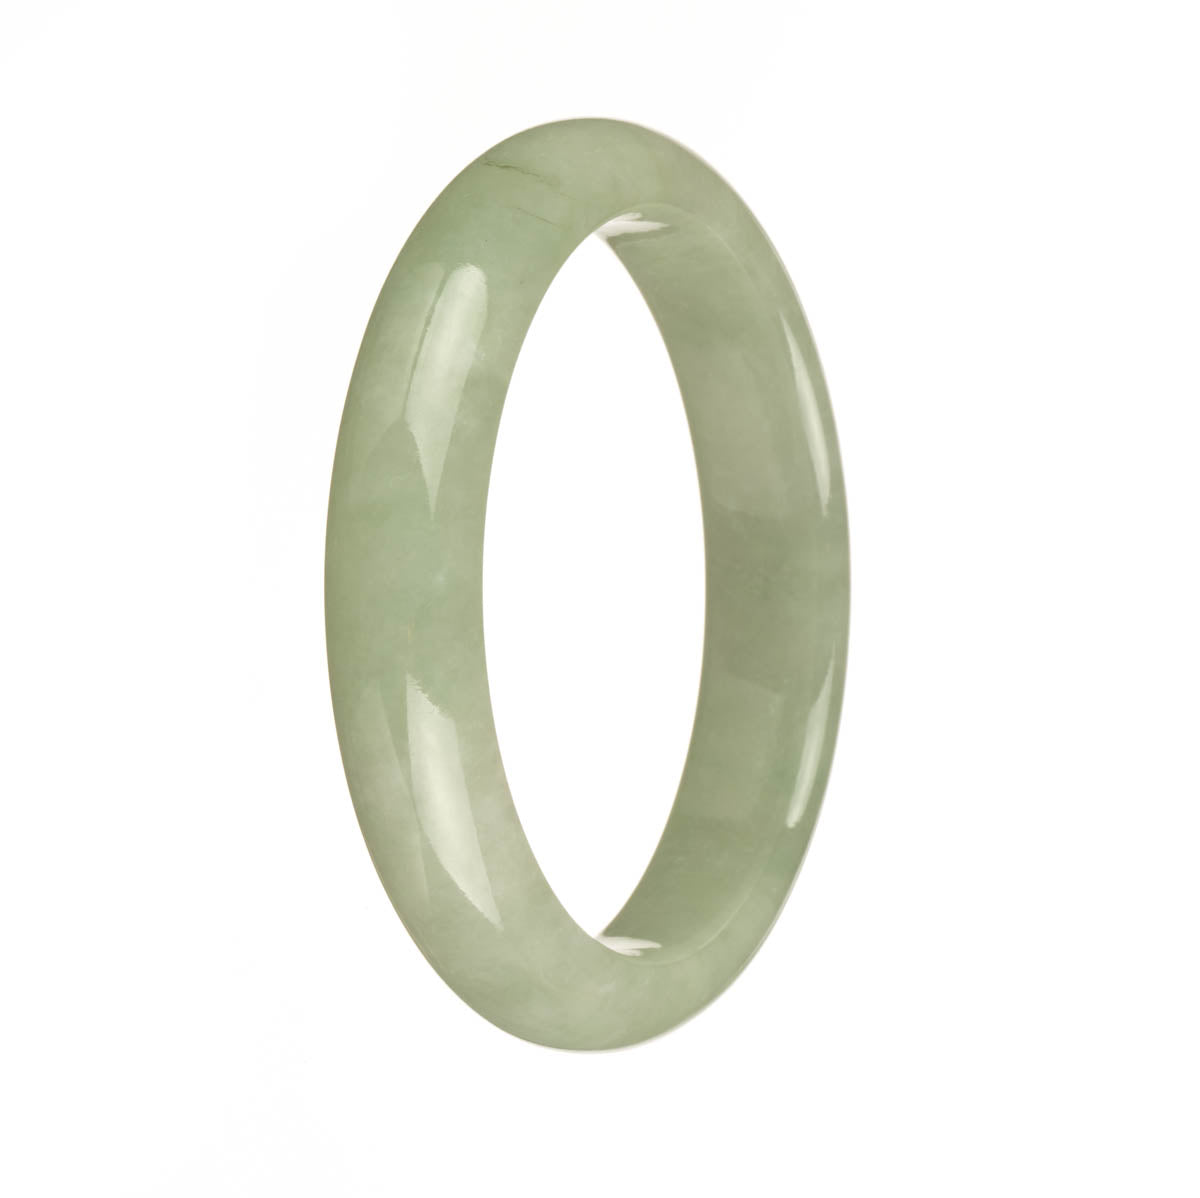 Authentic Grade A Green Jade Bangle Bracelet - 59mm Half Moon